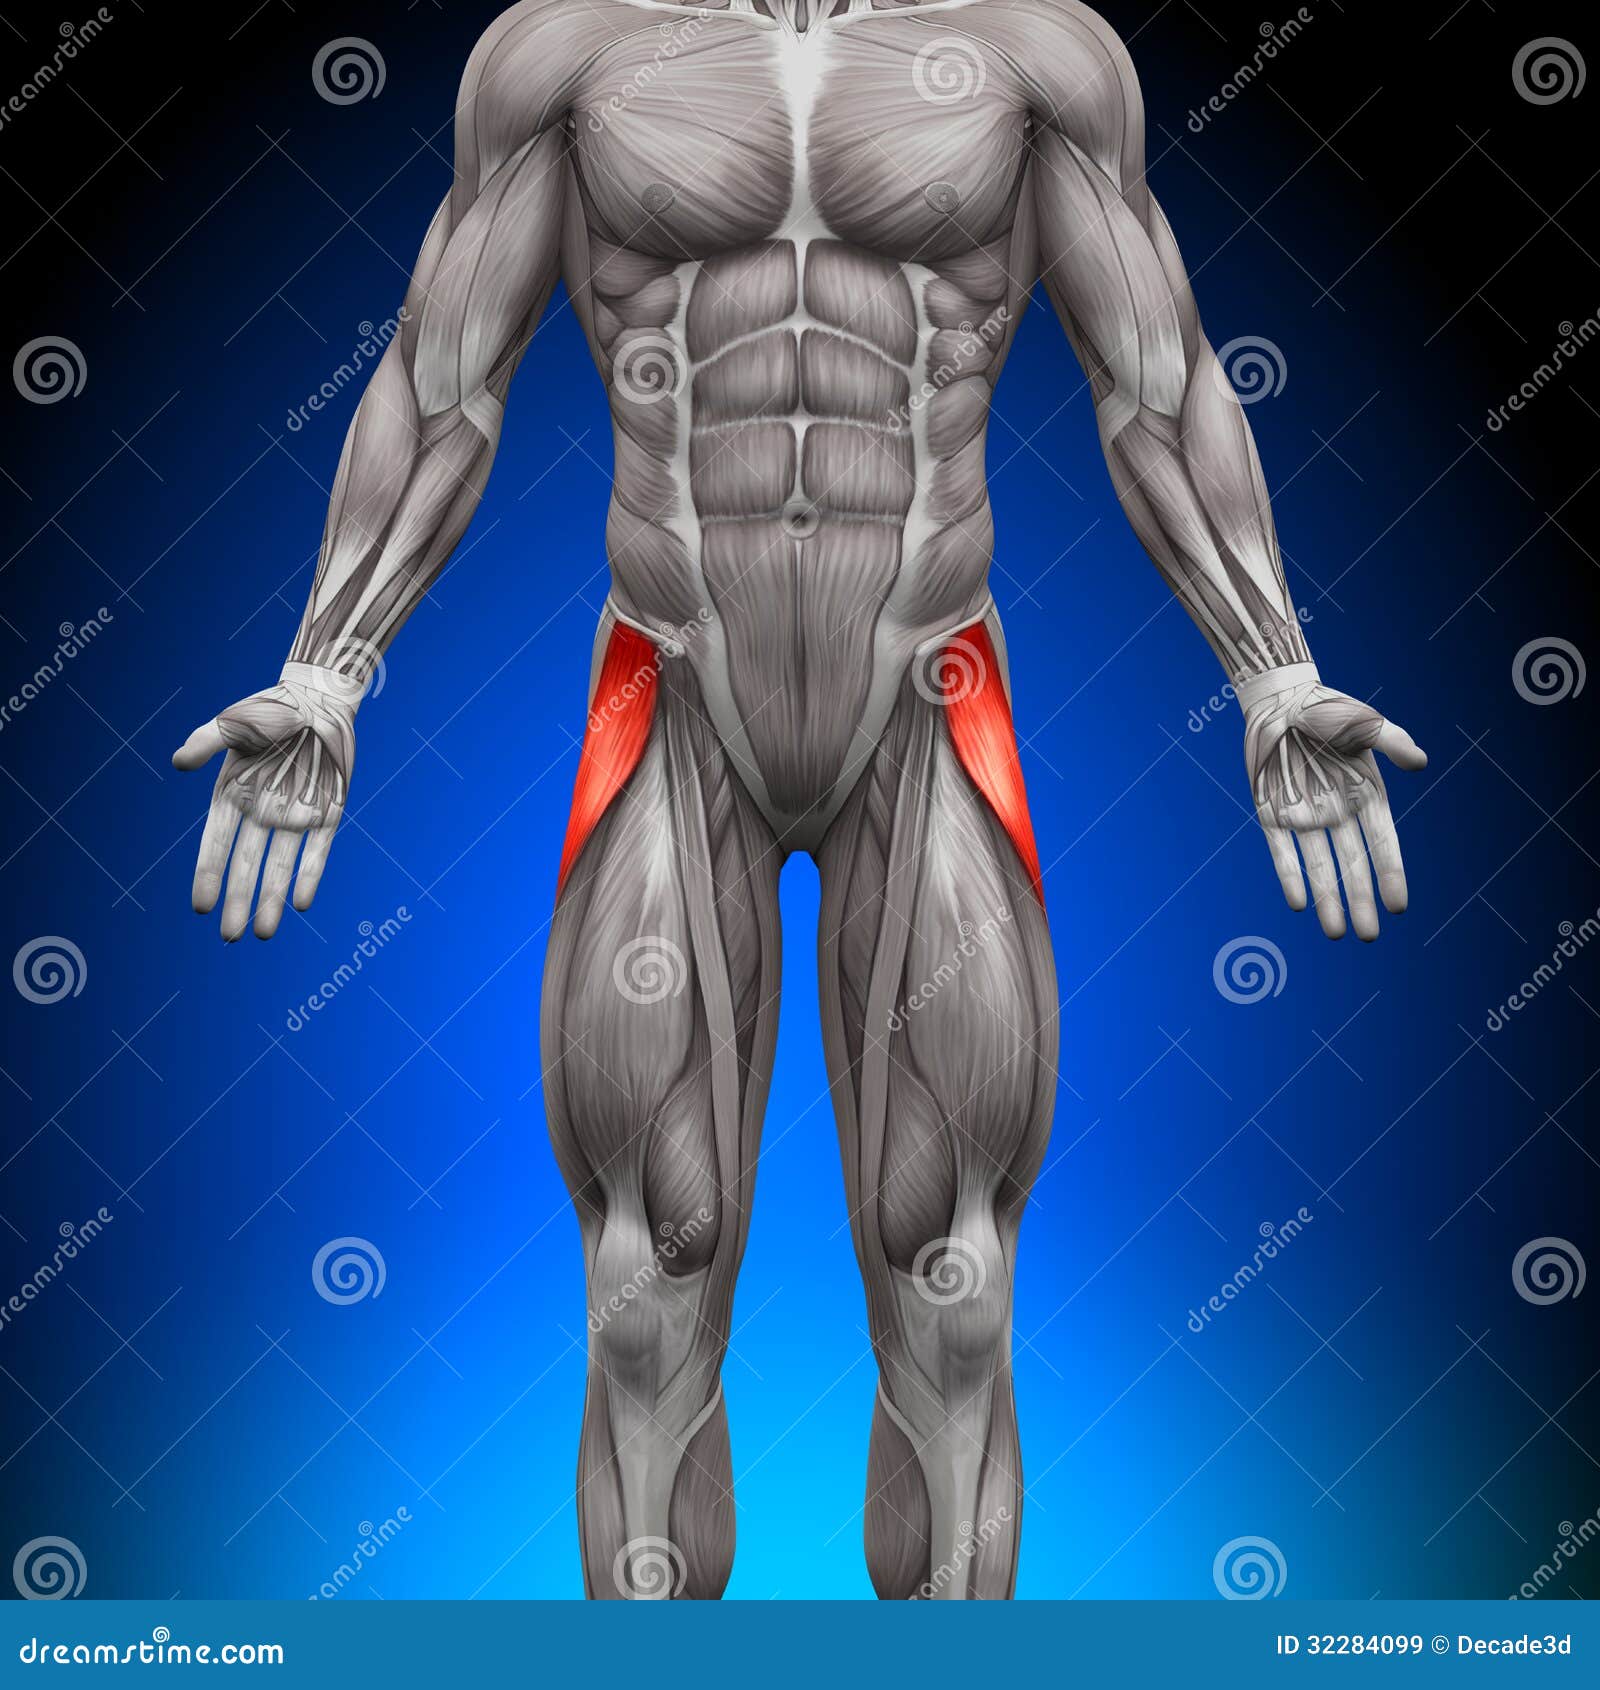 tensor fasciae latea - anatomy muscles